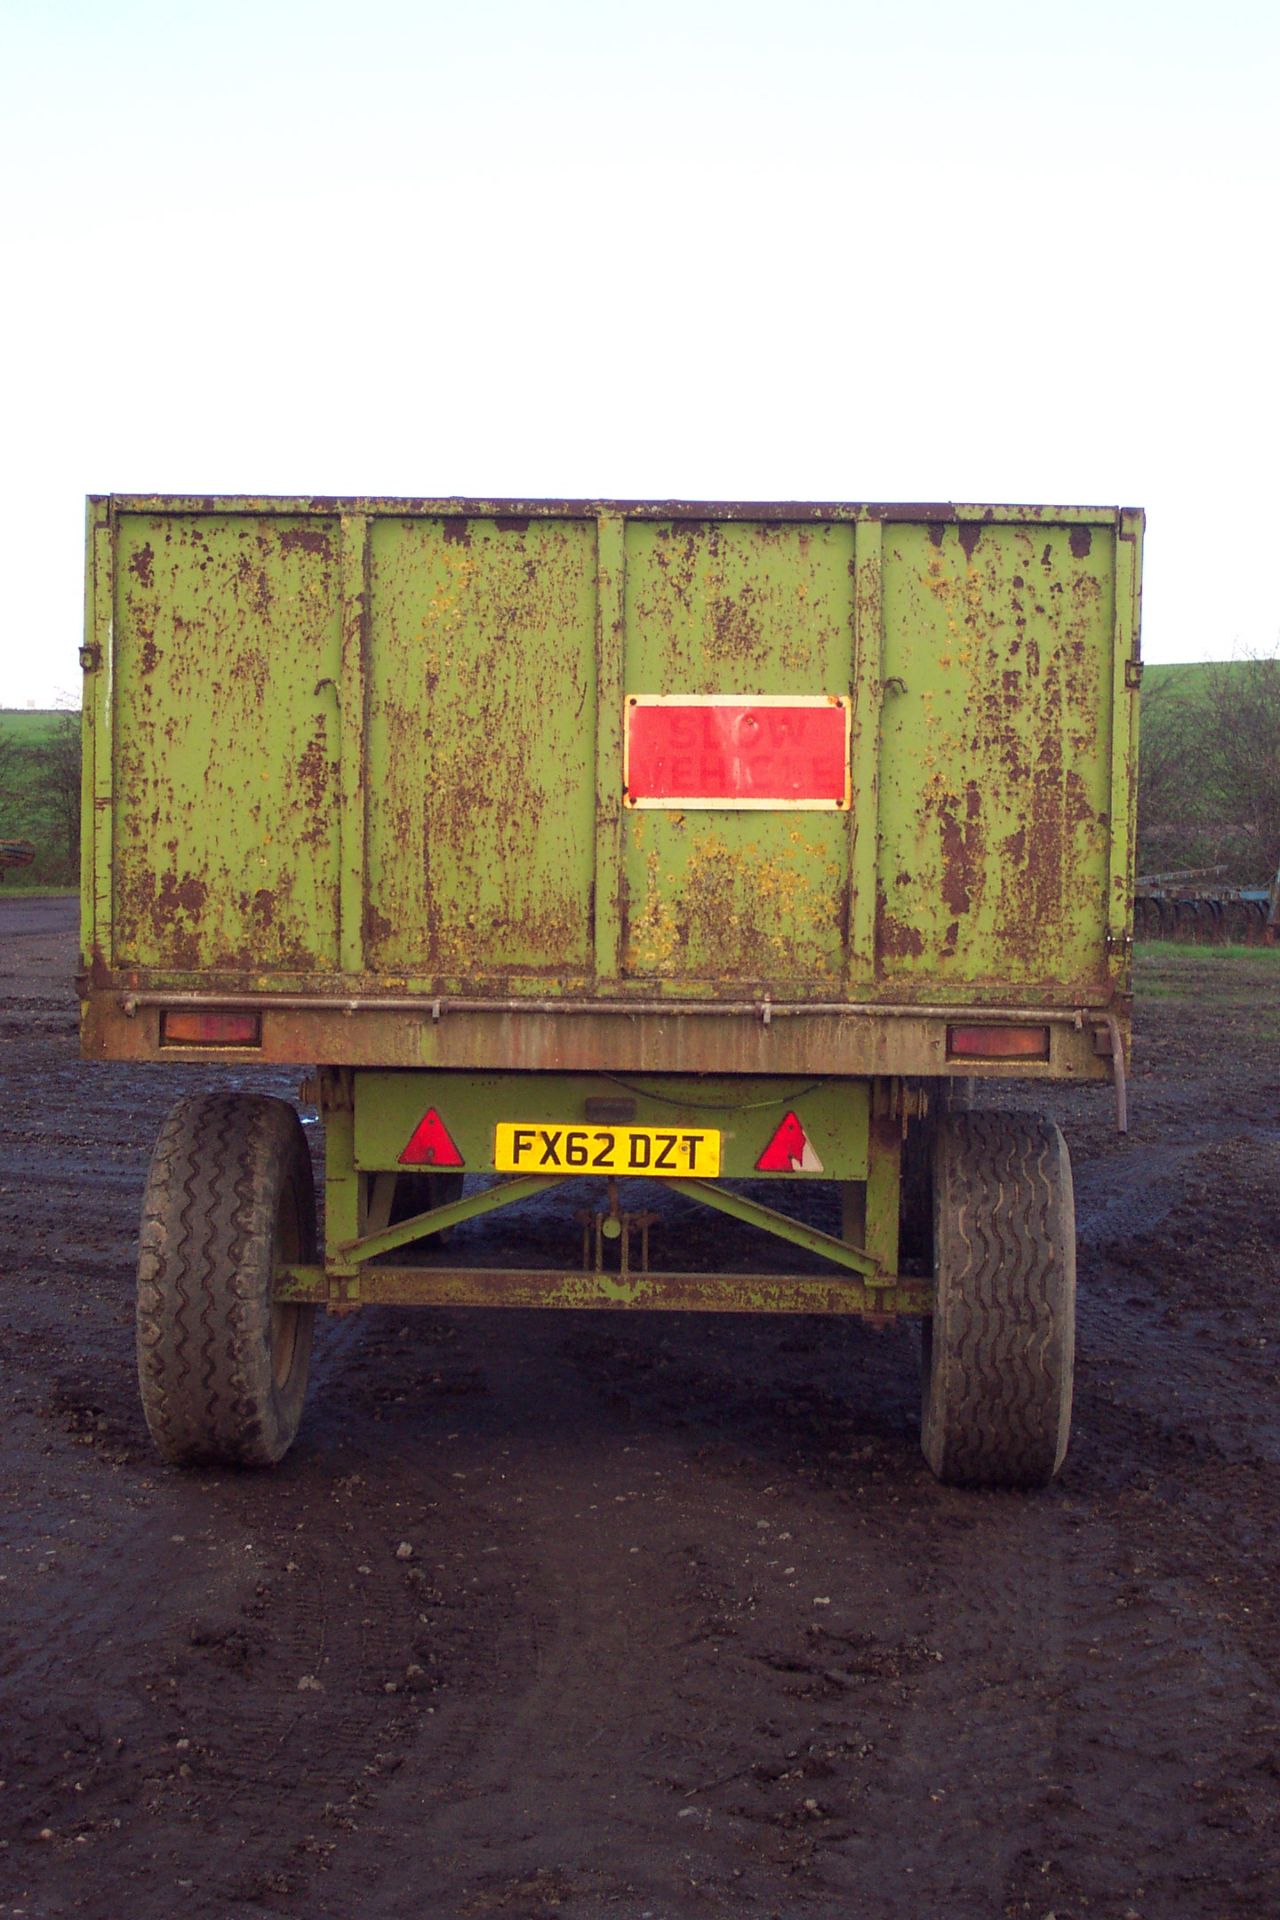 Big K 10 Tonne Trailer. Location Sleaford, Lincolnshire - Image 3 of 4